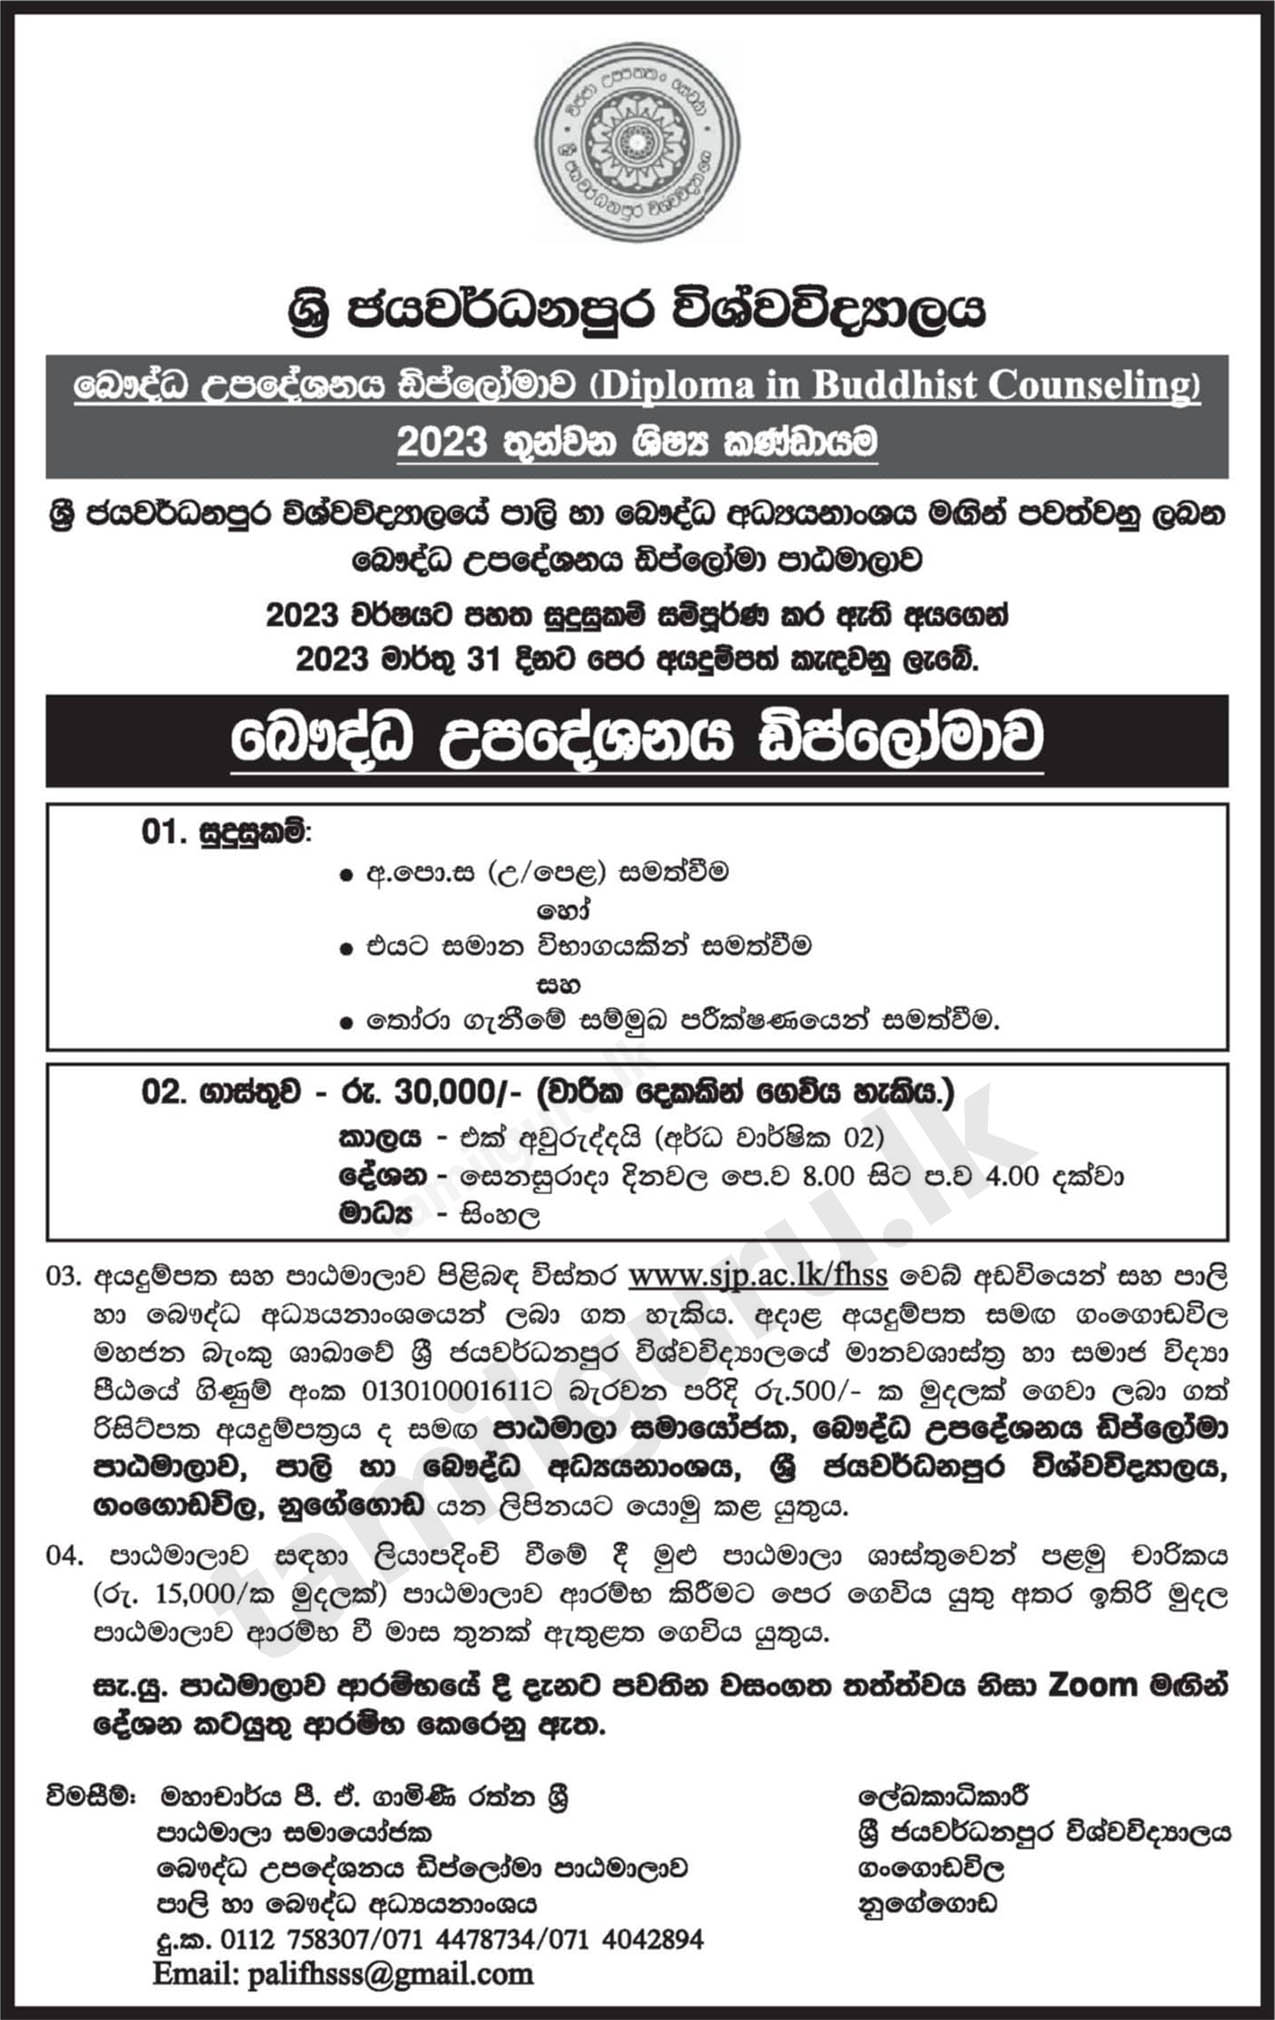 Diploma in Buddhist Counseling 2023 University of Sri Jayewardenepura